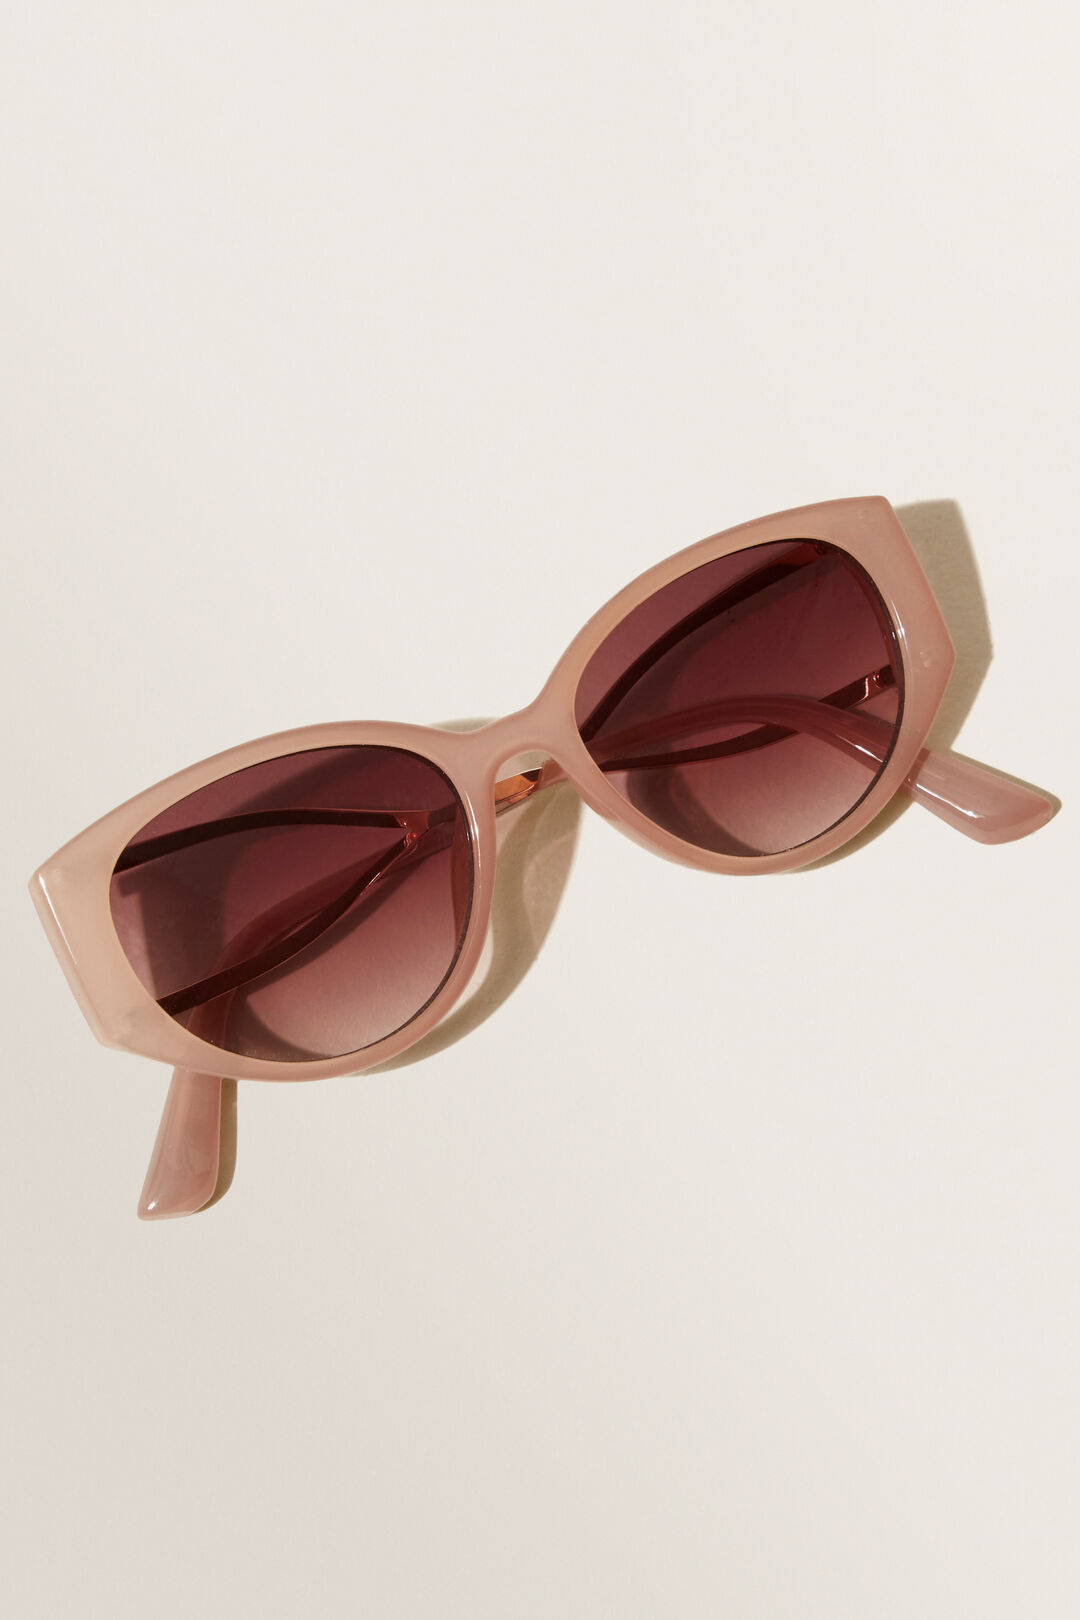 Leah Detail Sunglasses  Blush  hi-res